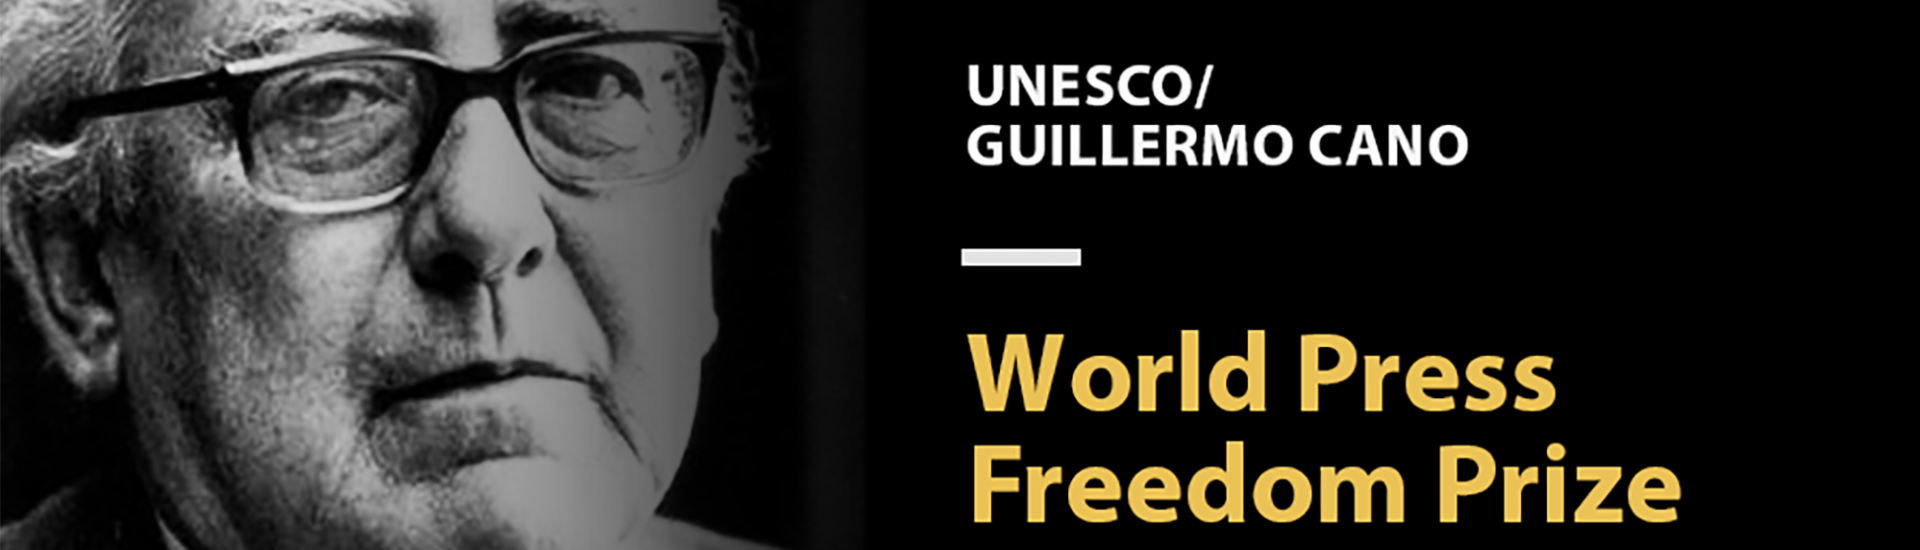 Poster van de Unesco - Guillermo Cano World Press Freedom Prize